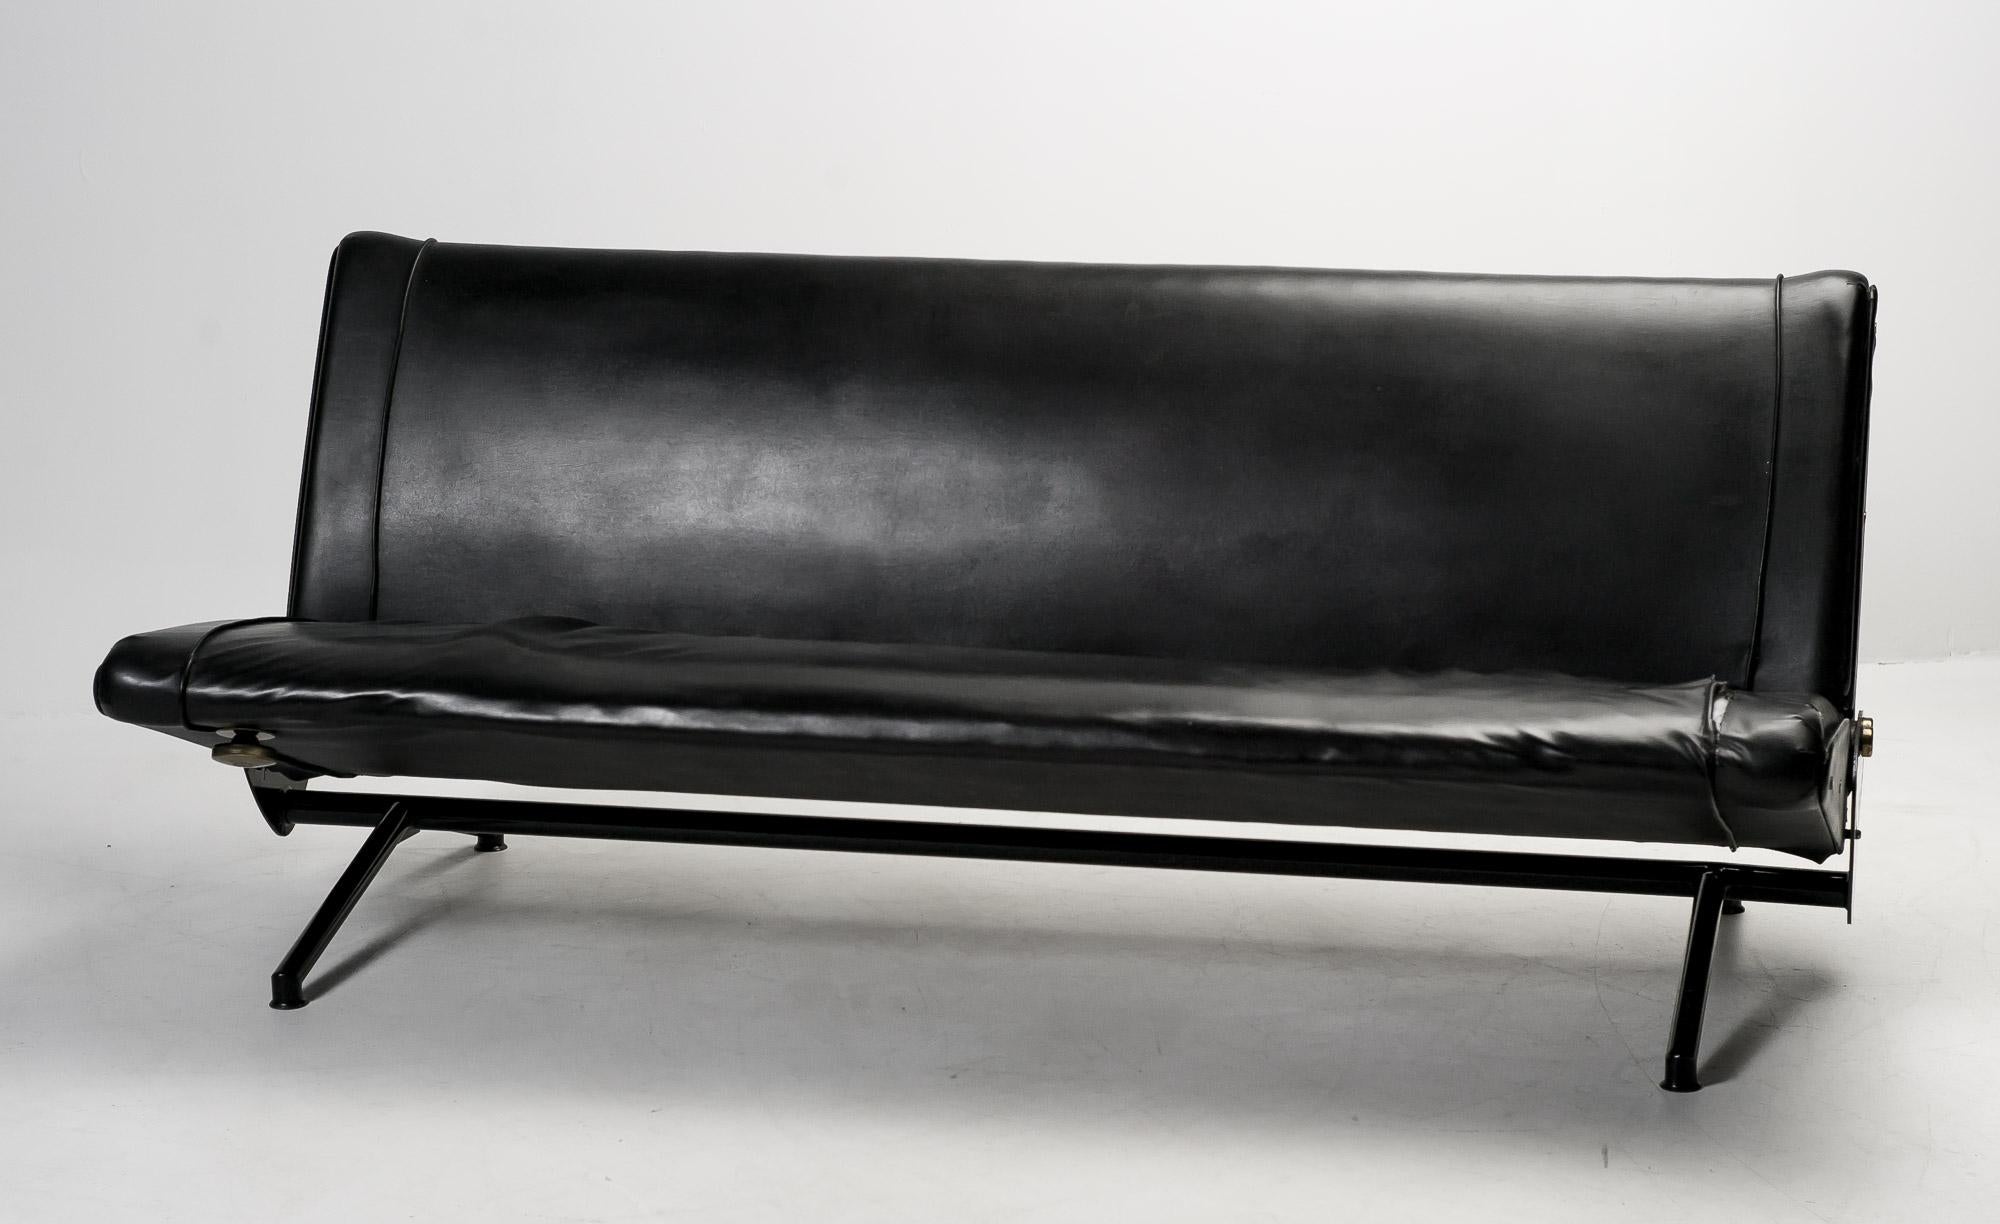 Steel Early D70 Sofa by Osvaldo Borsani for Tecno, Provenance Cees Braakman